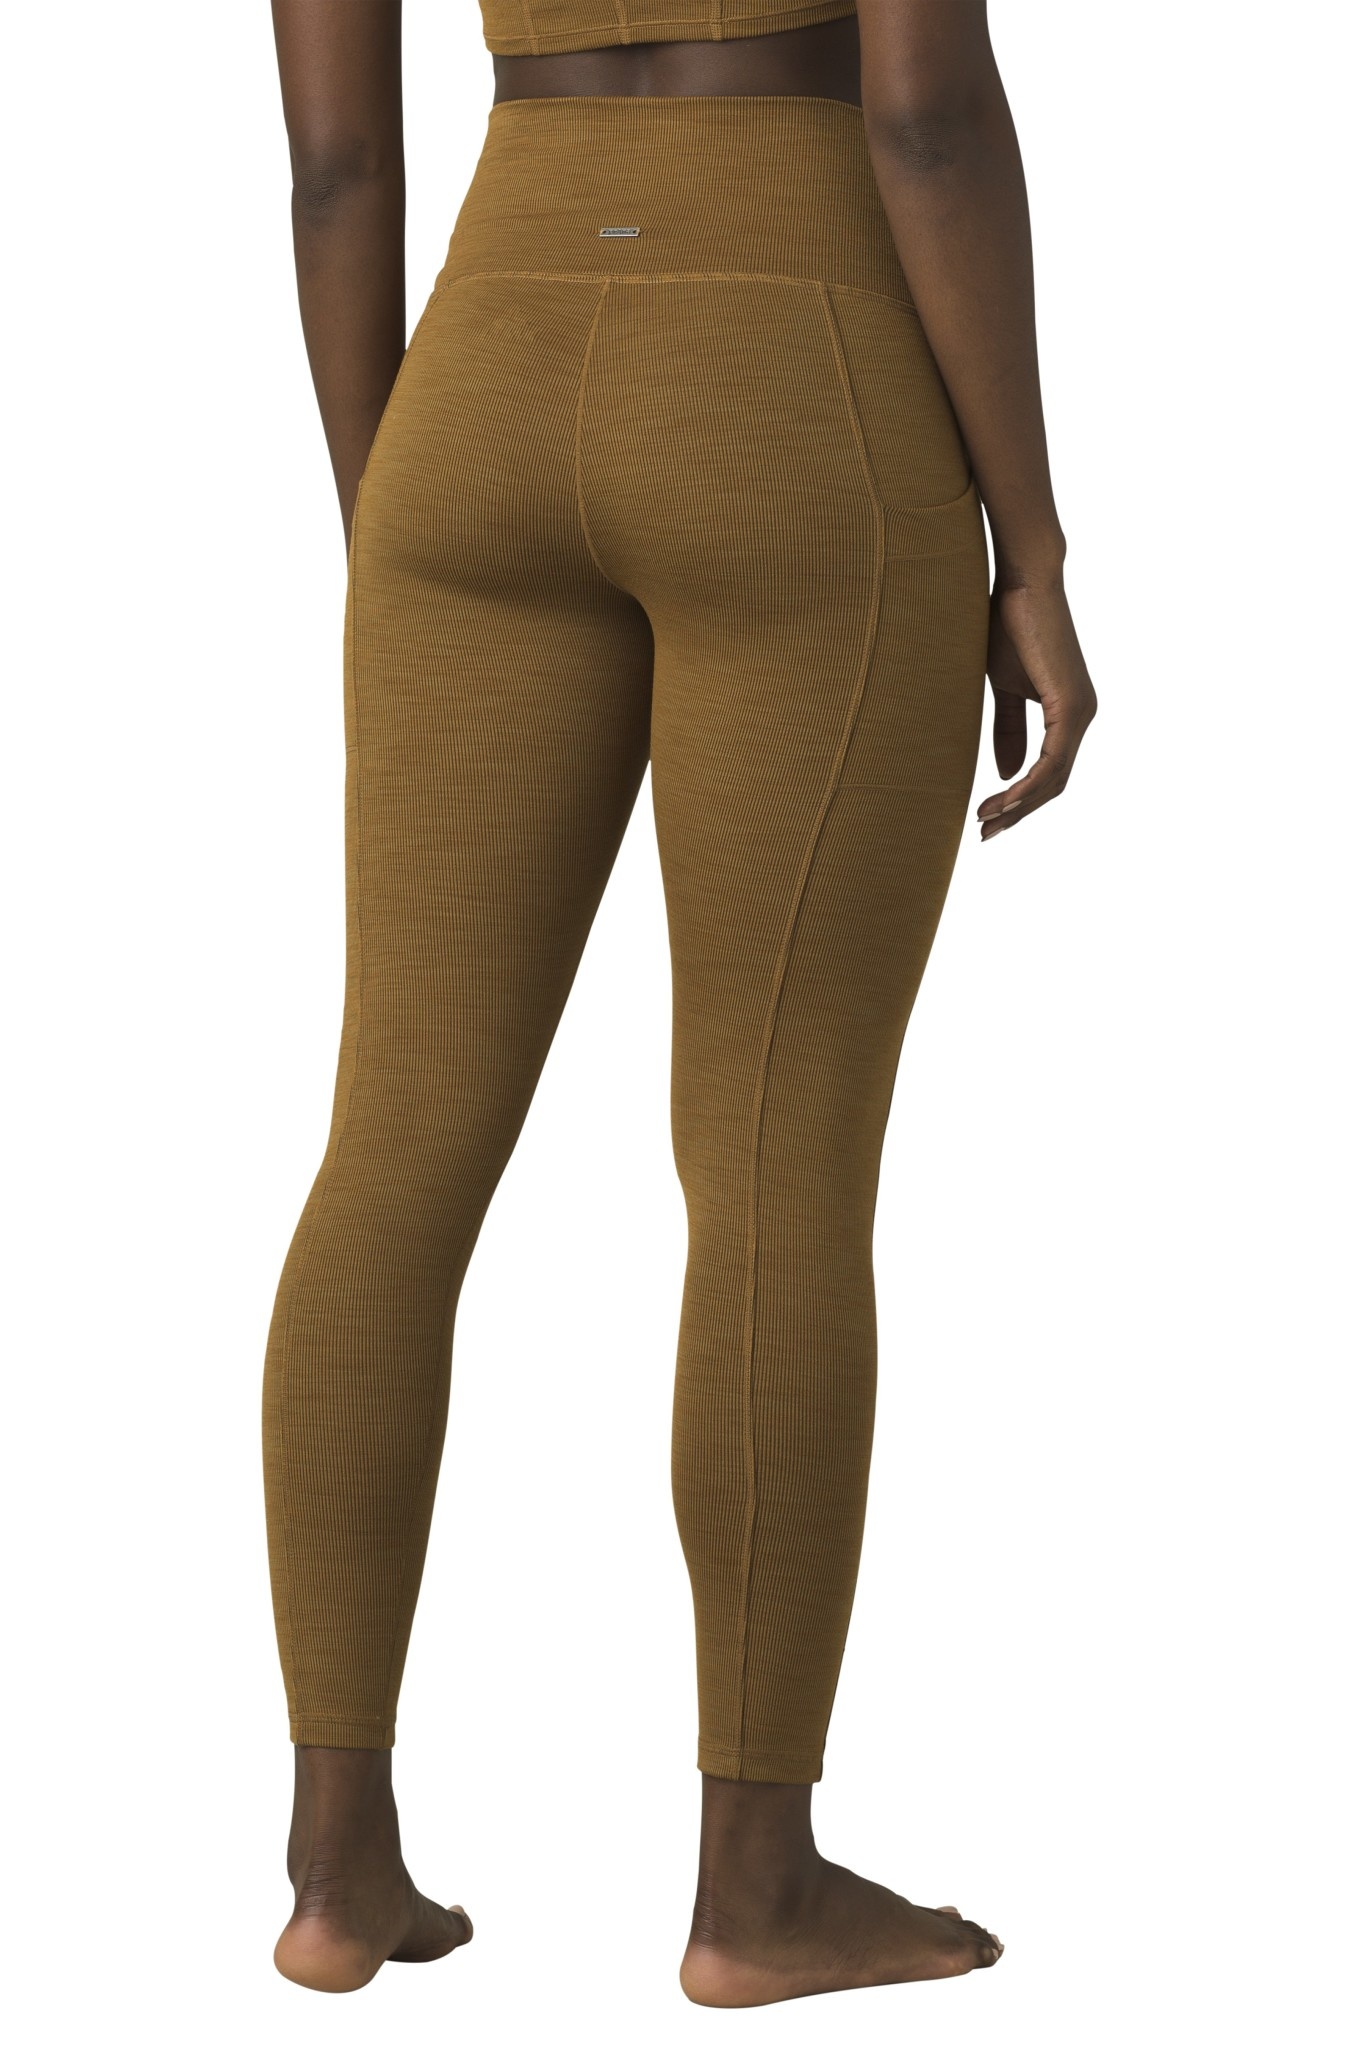 prAna Becksa 7/8 Legging - Women's, Medium, Cargo Green — Womens Clothing  Size: Medium, Gender: Female, Age Group: Adults, Apparel Application:  Casual — W41180589-301-M - 1 out of 2 models